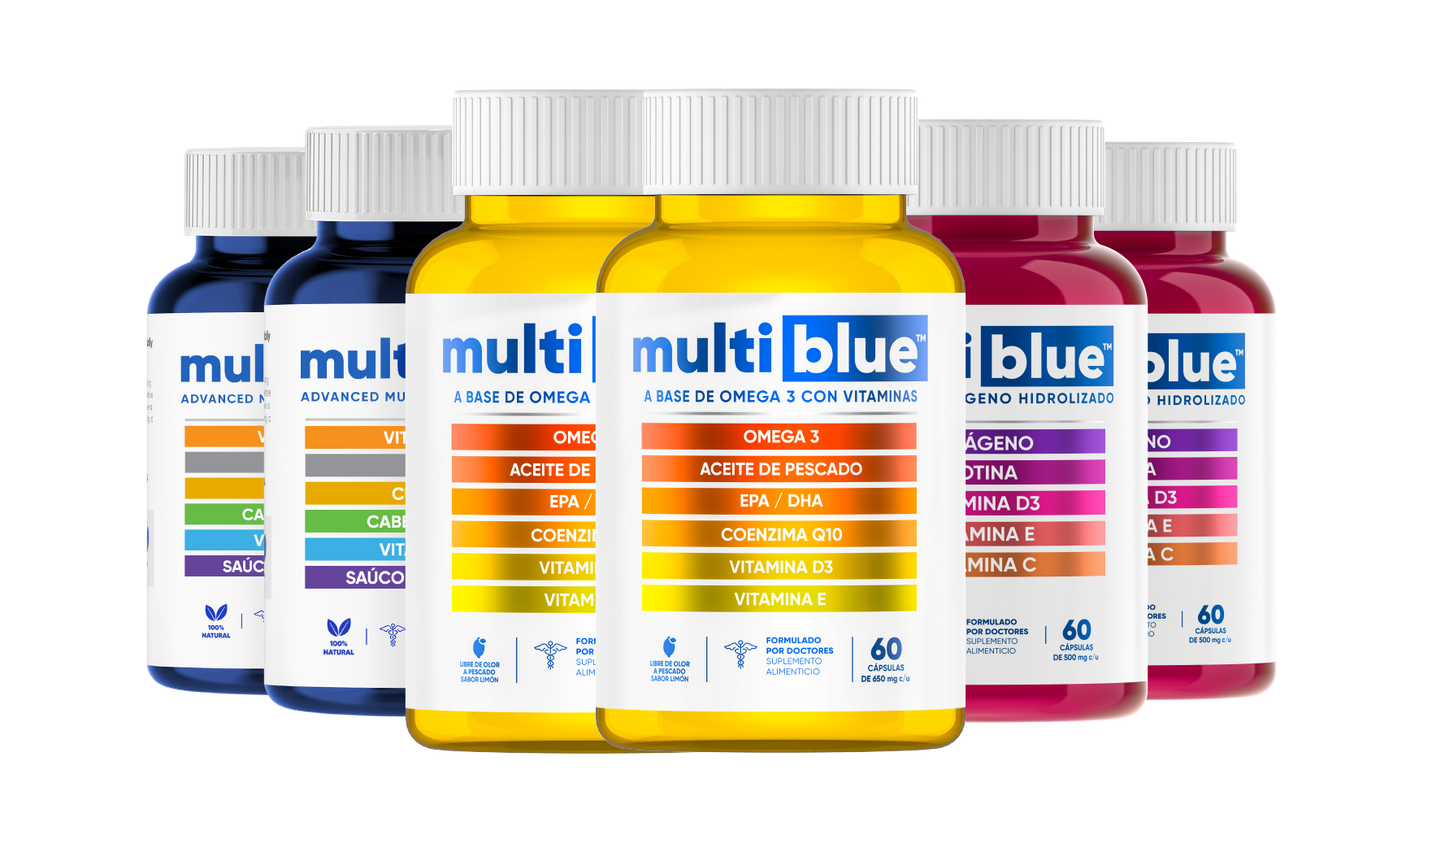 MultiBlue Immune Ultra